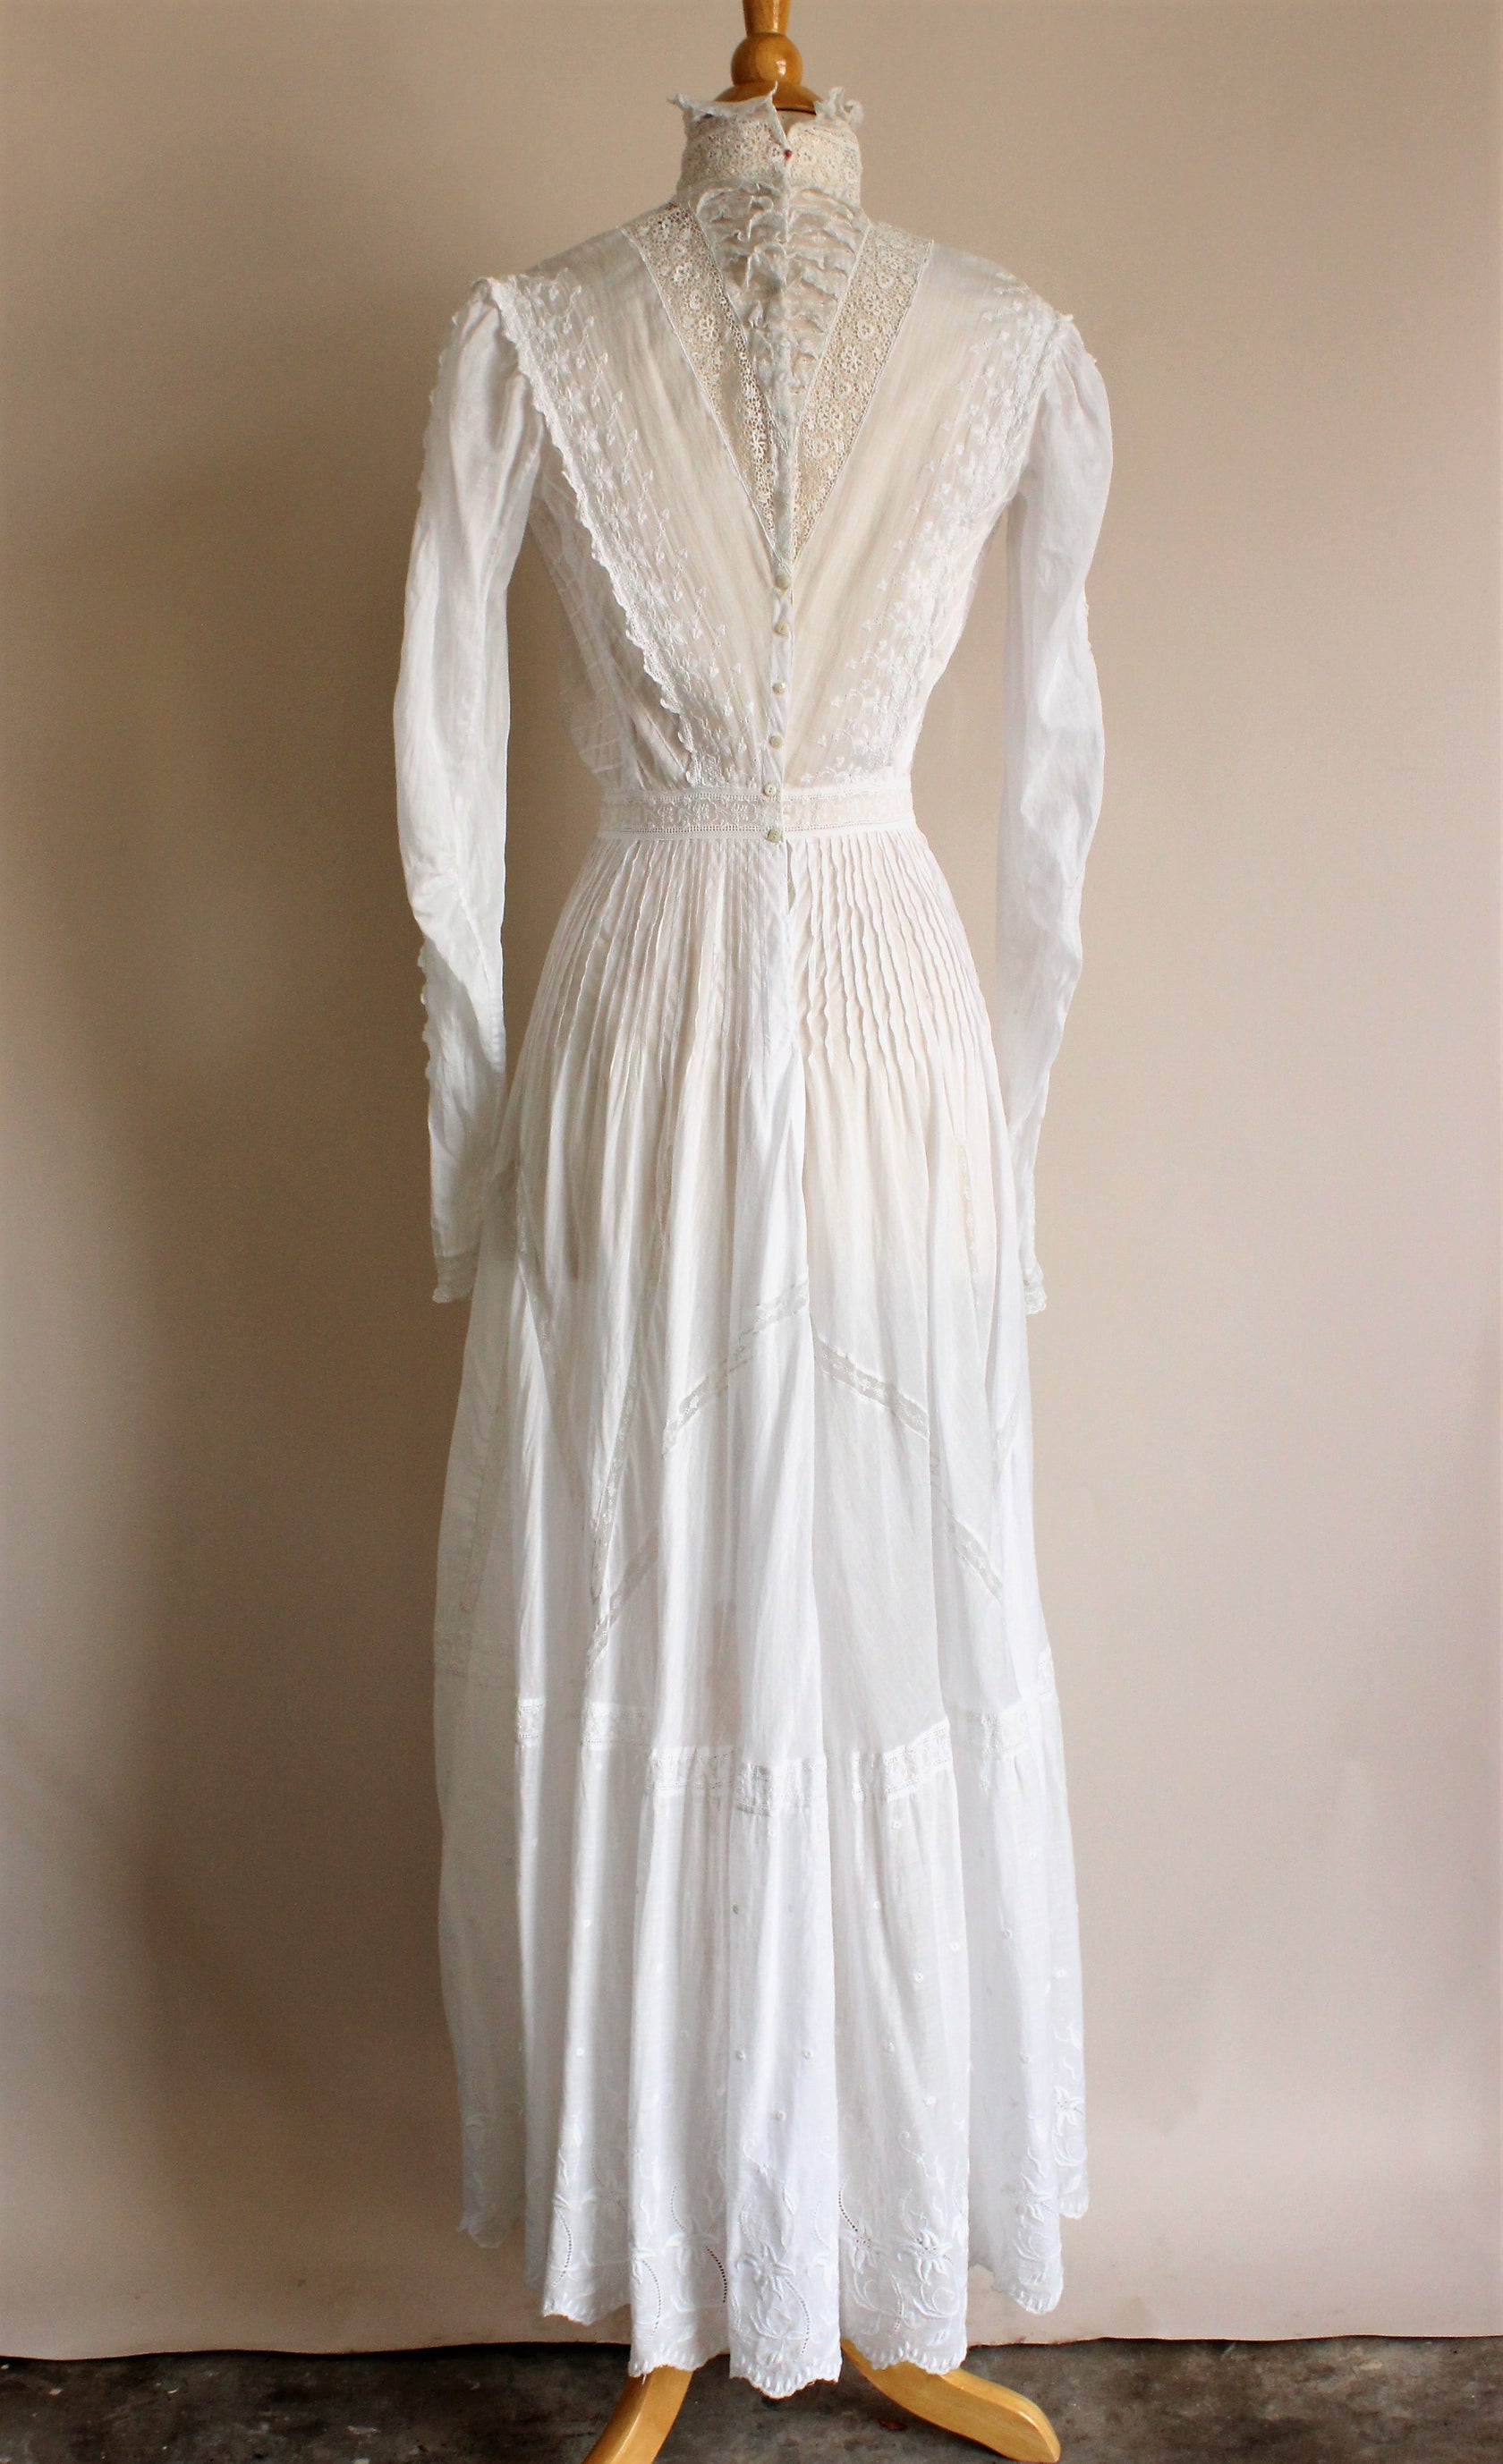 Antique Edwardian White Dress, 